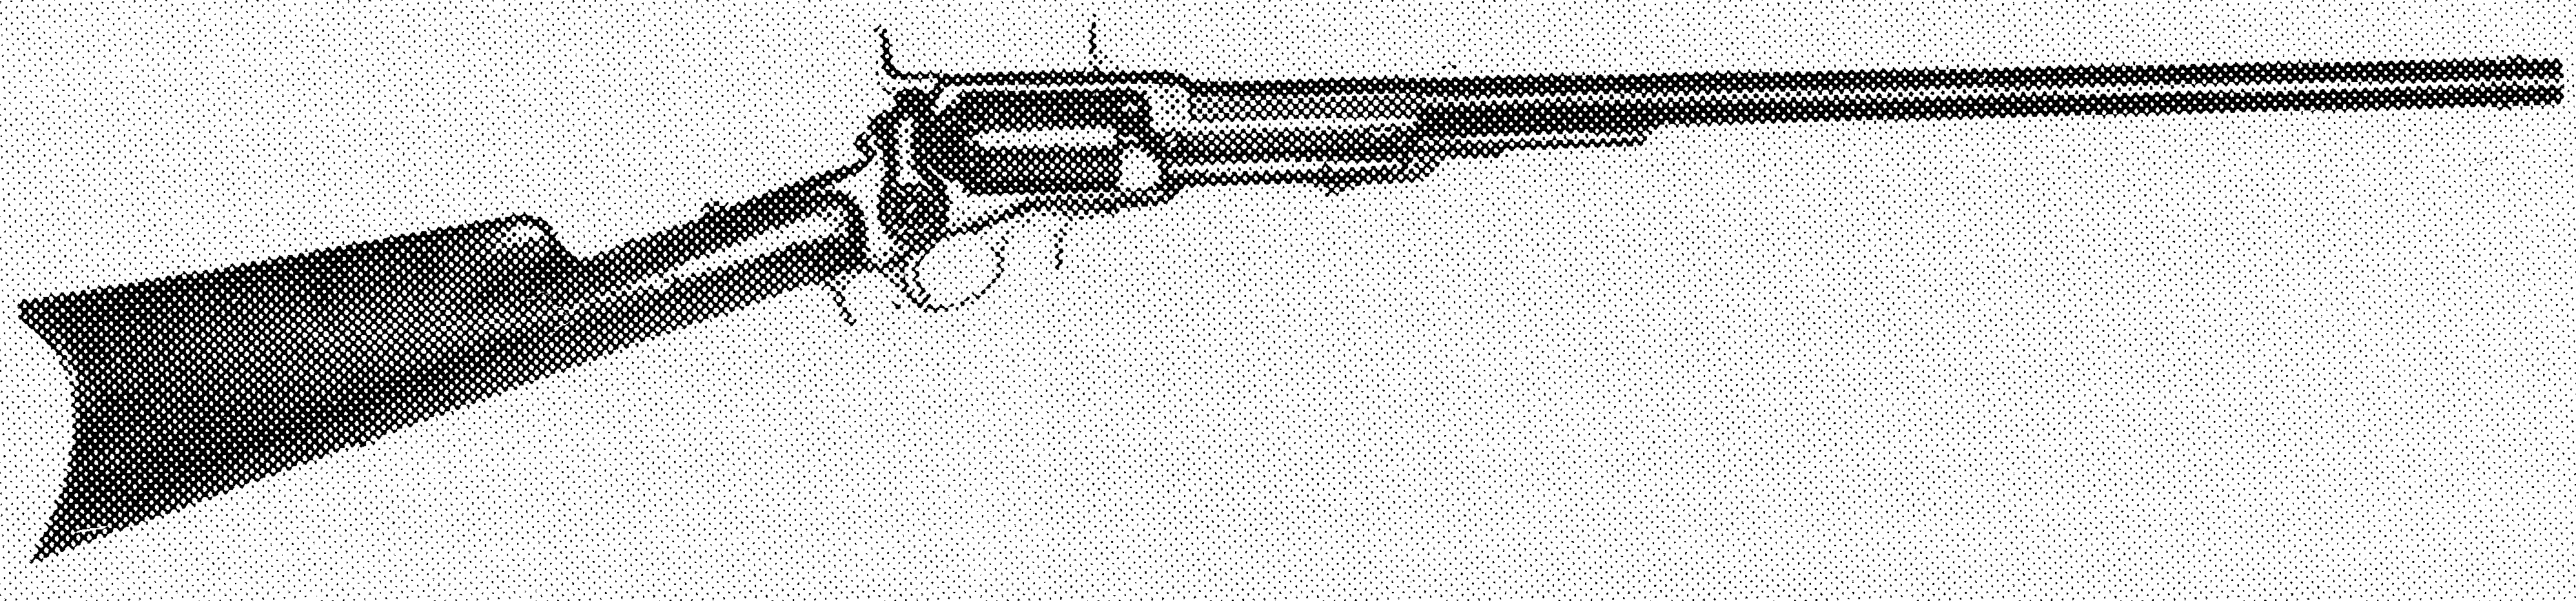 Model 1855 1st Model Carbine